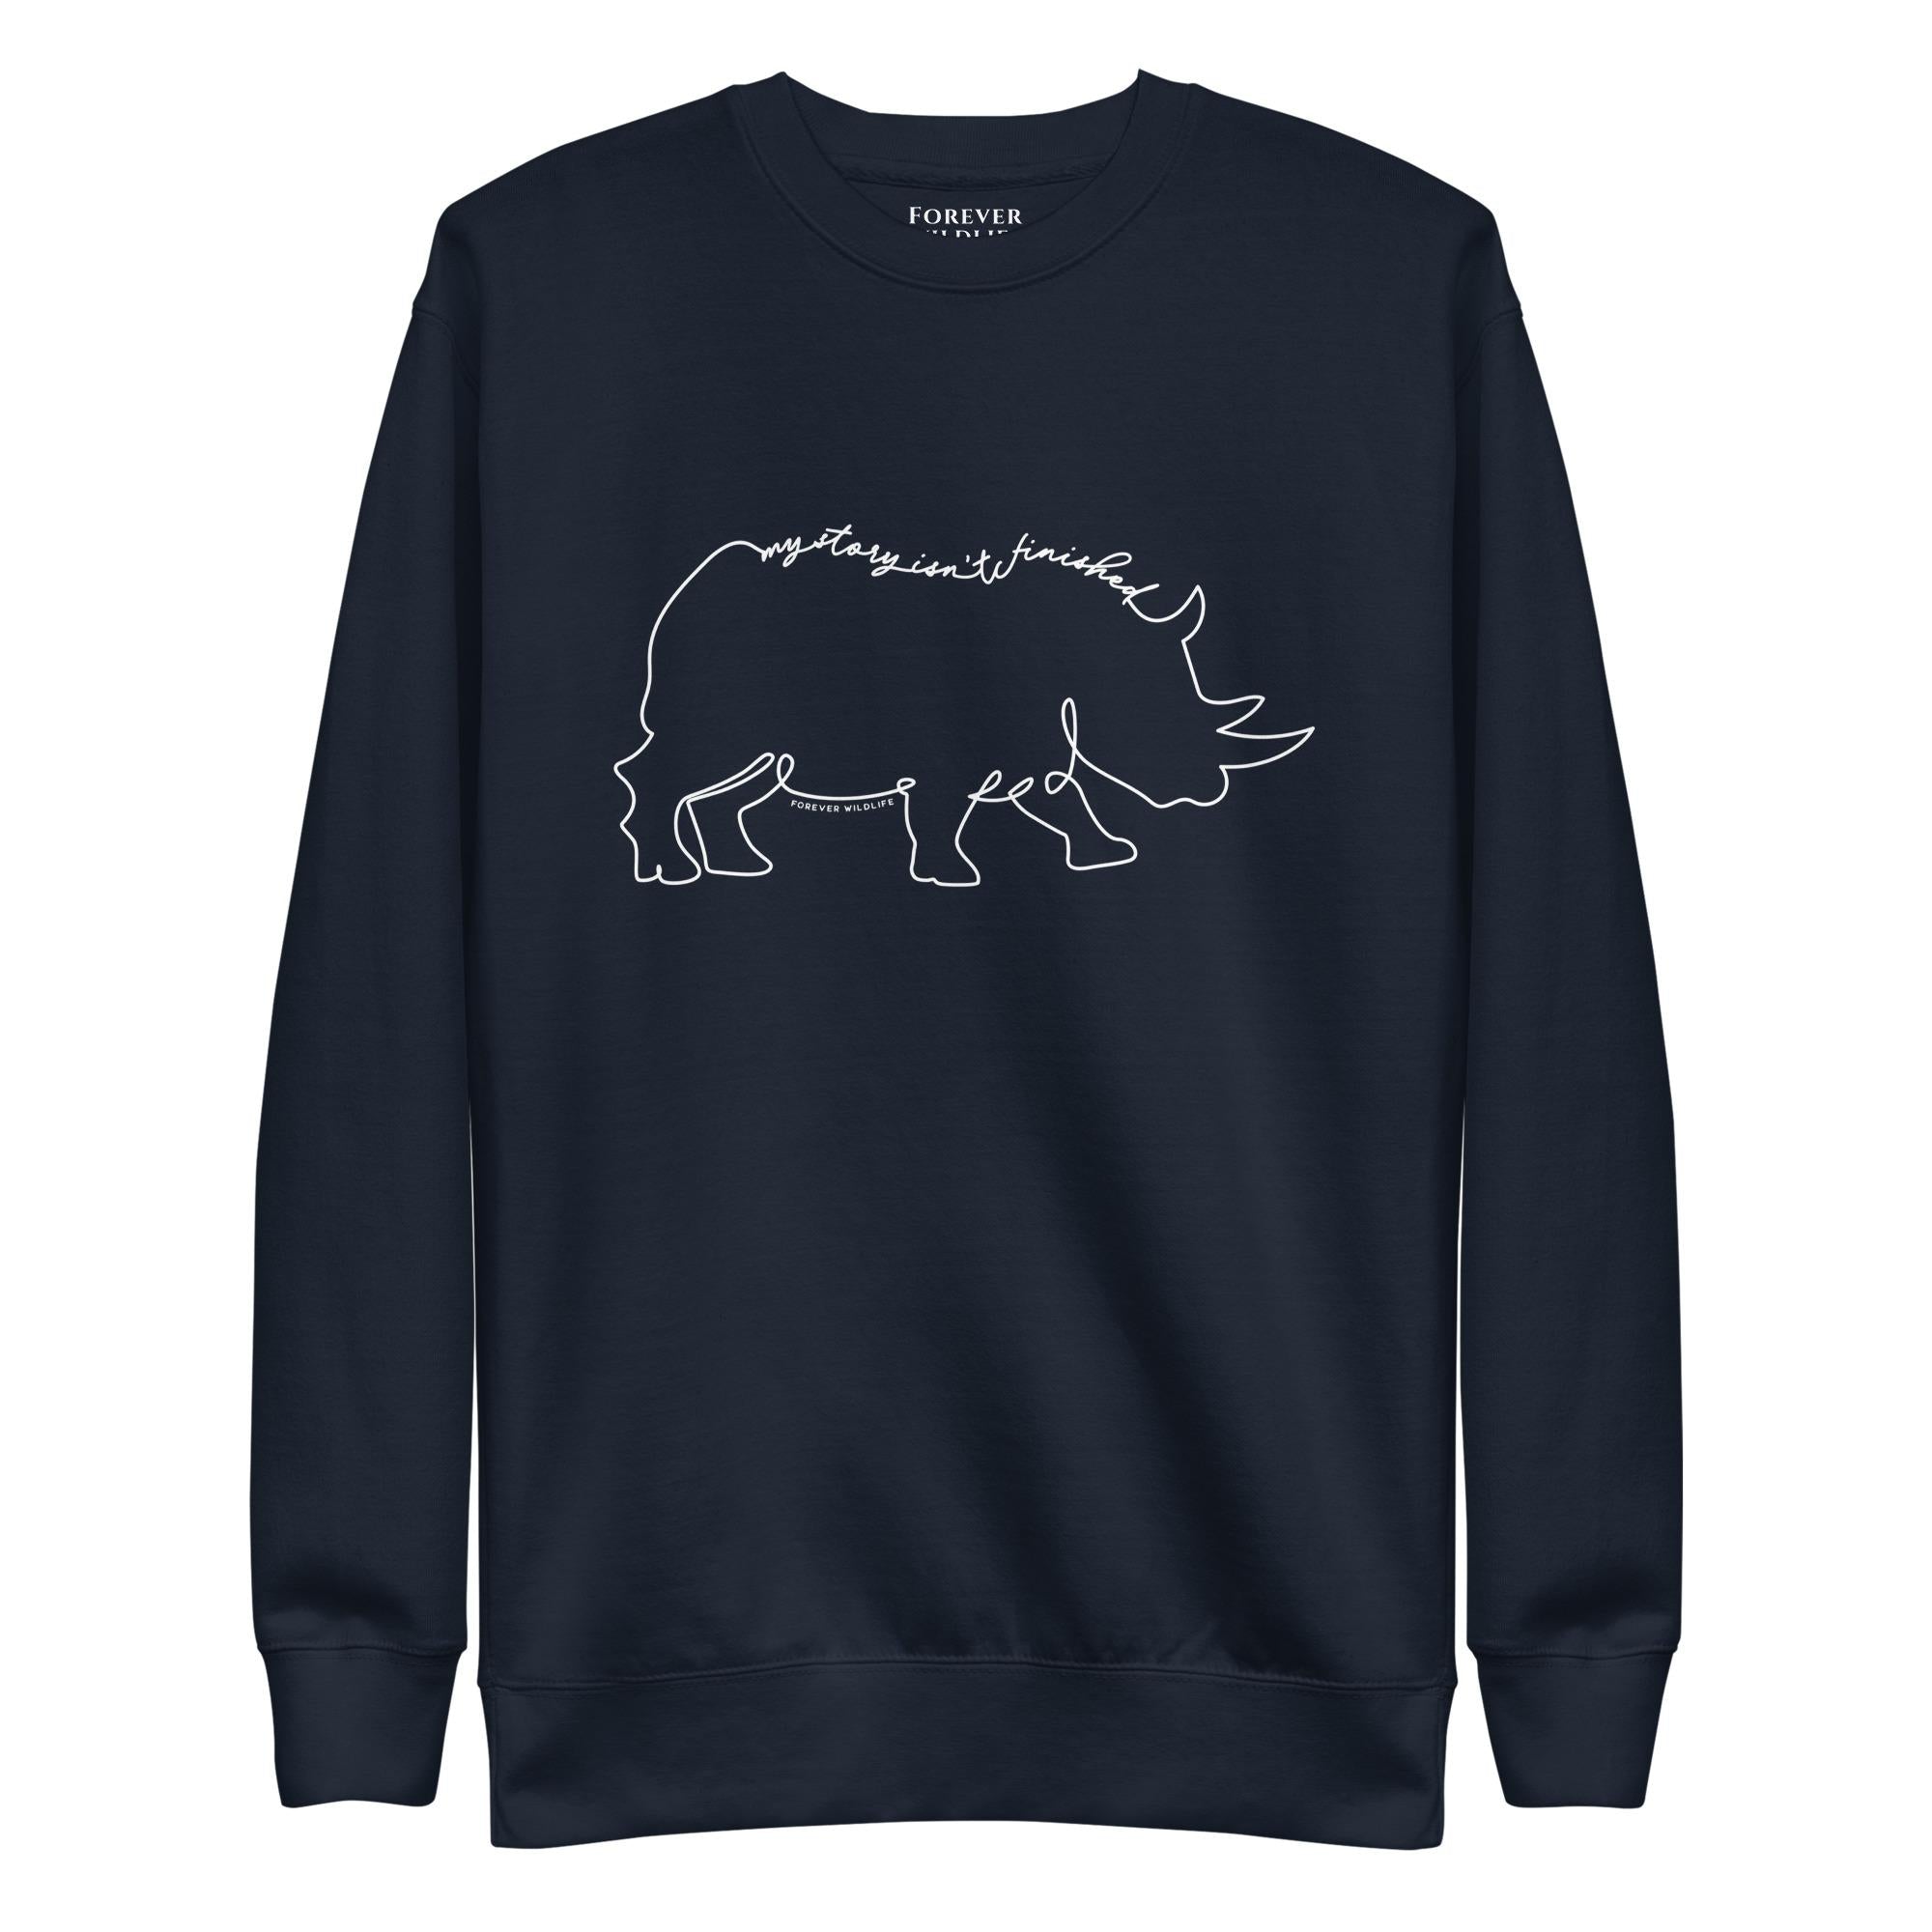 Rhino Sweatshirt in Navy-Premium Wildlife Animal Inspiration Sweatshirt Design with 'My Story Isn't Finished' text, part of Wildlife Sweatshirts & Clothing from Forever Wildlife.